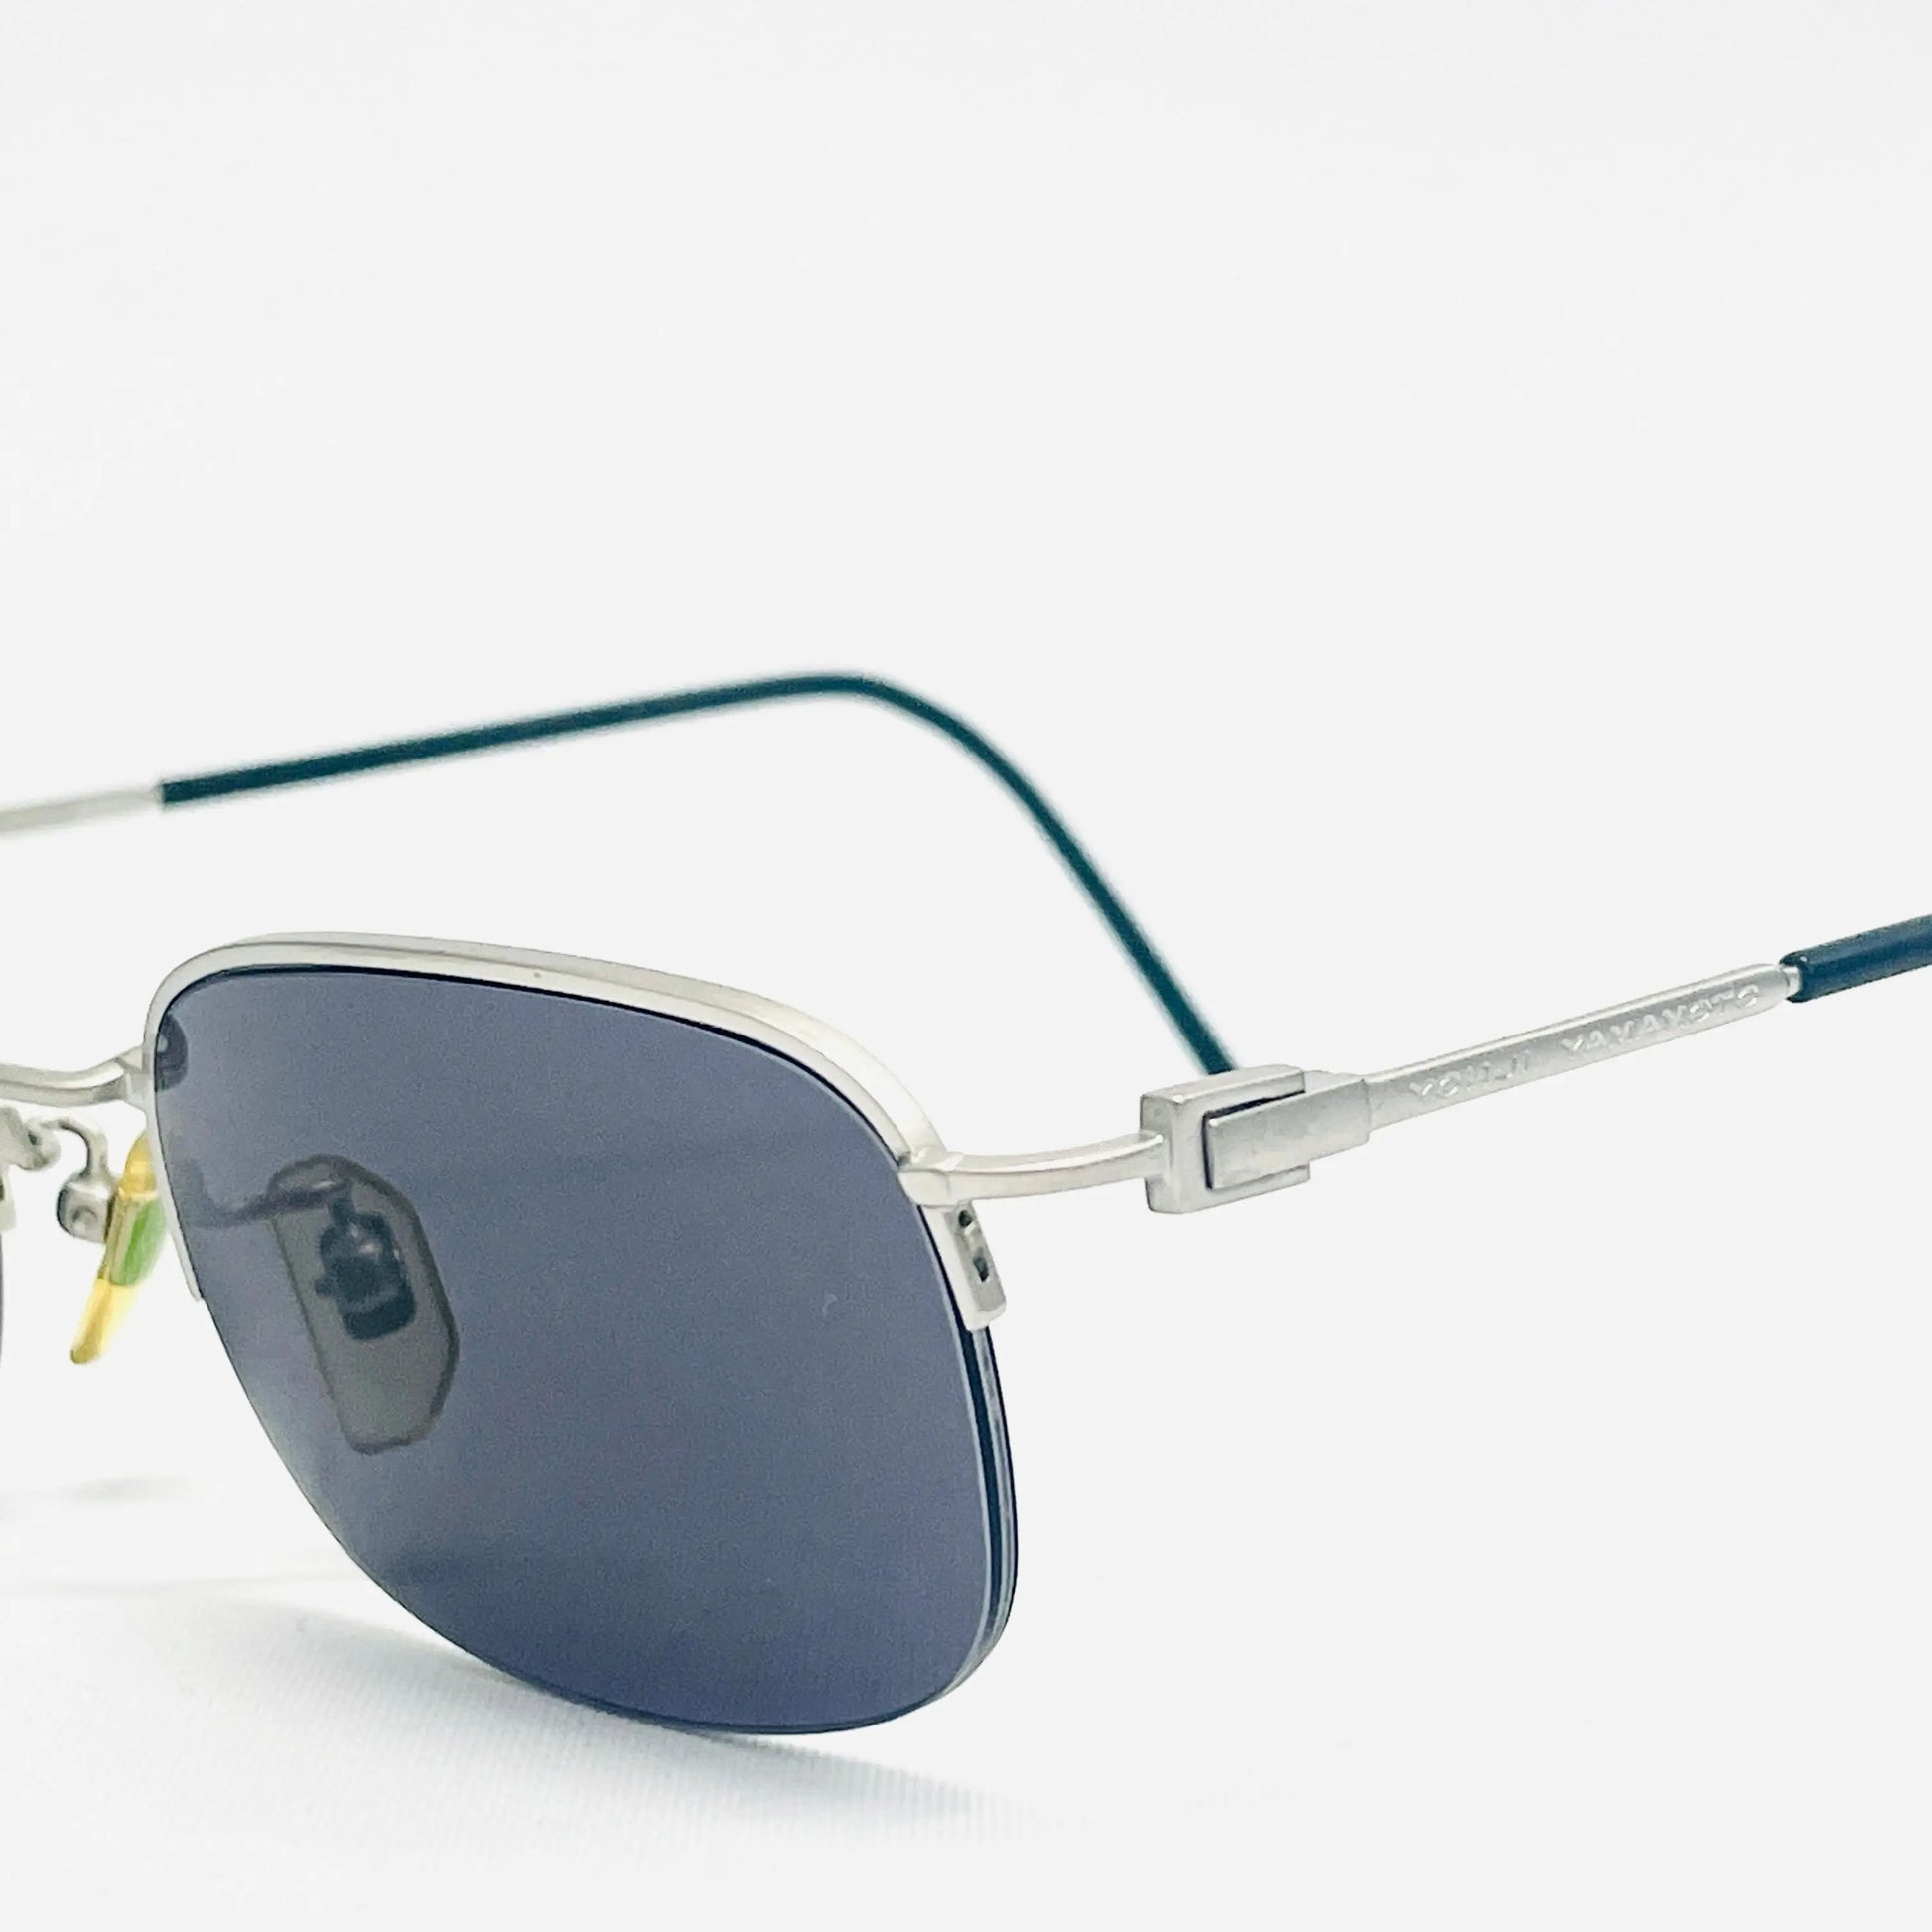 Yohji Yamamoto Sonnenbrille / Sunglasses - 51-5108